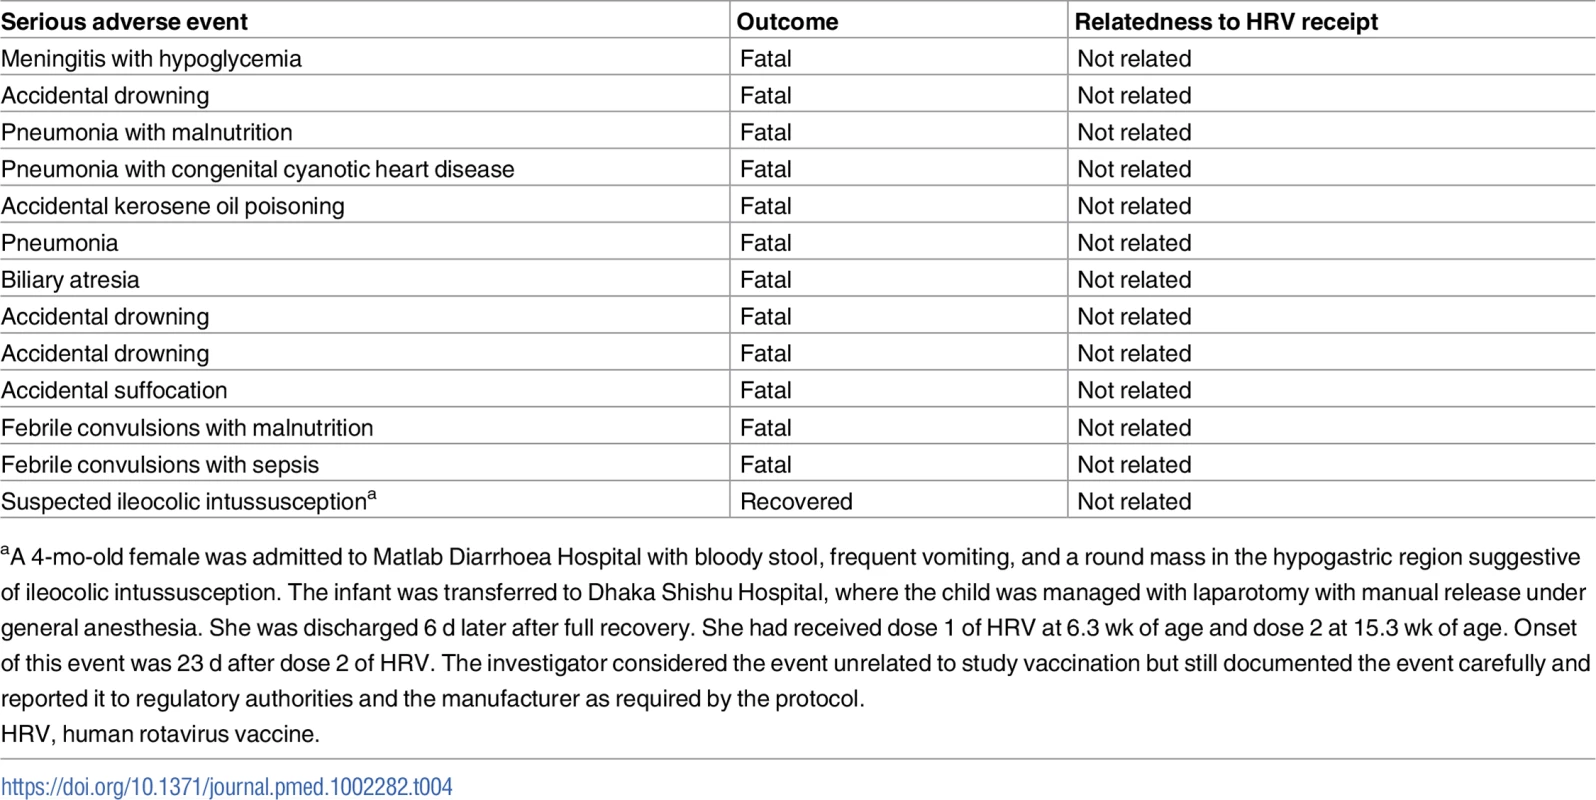 Serious adverse events identified among human rotavirus vaccine recipients.